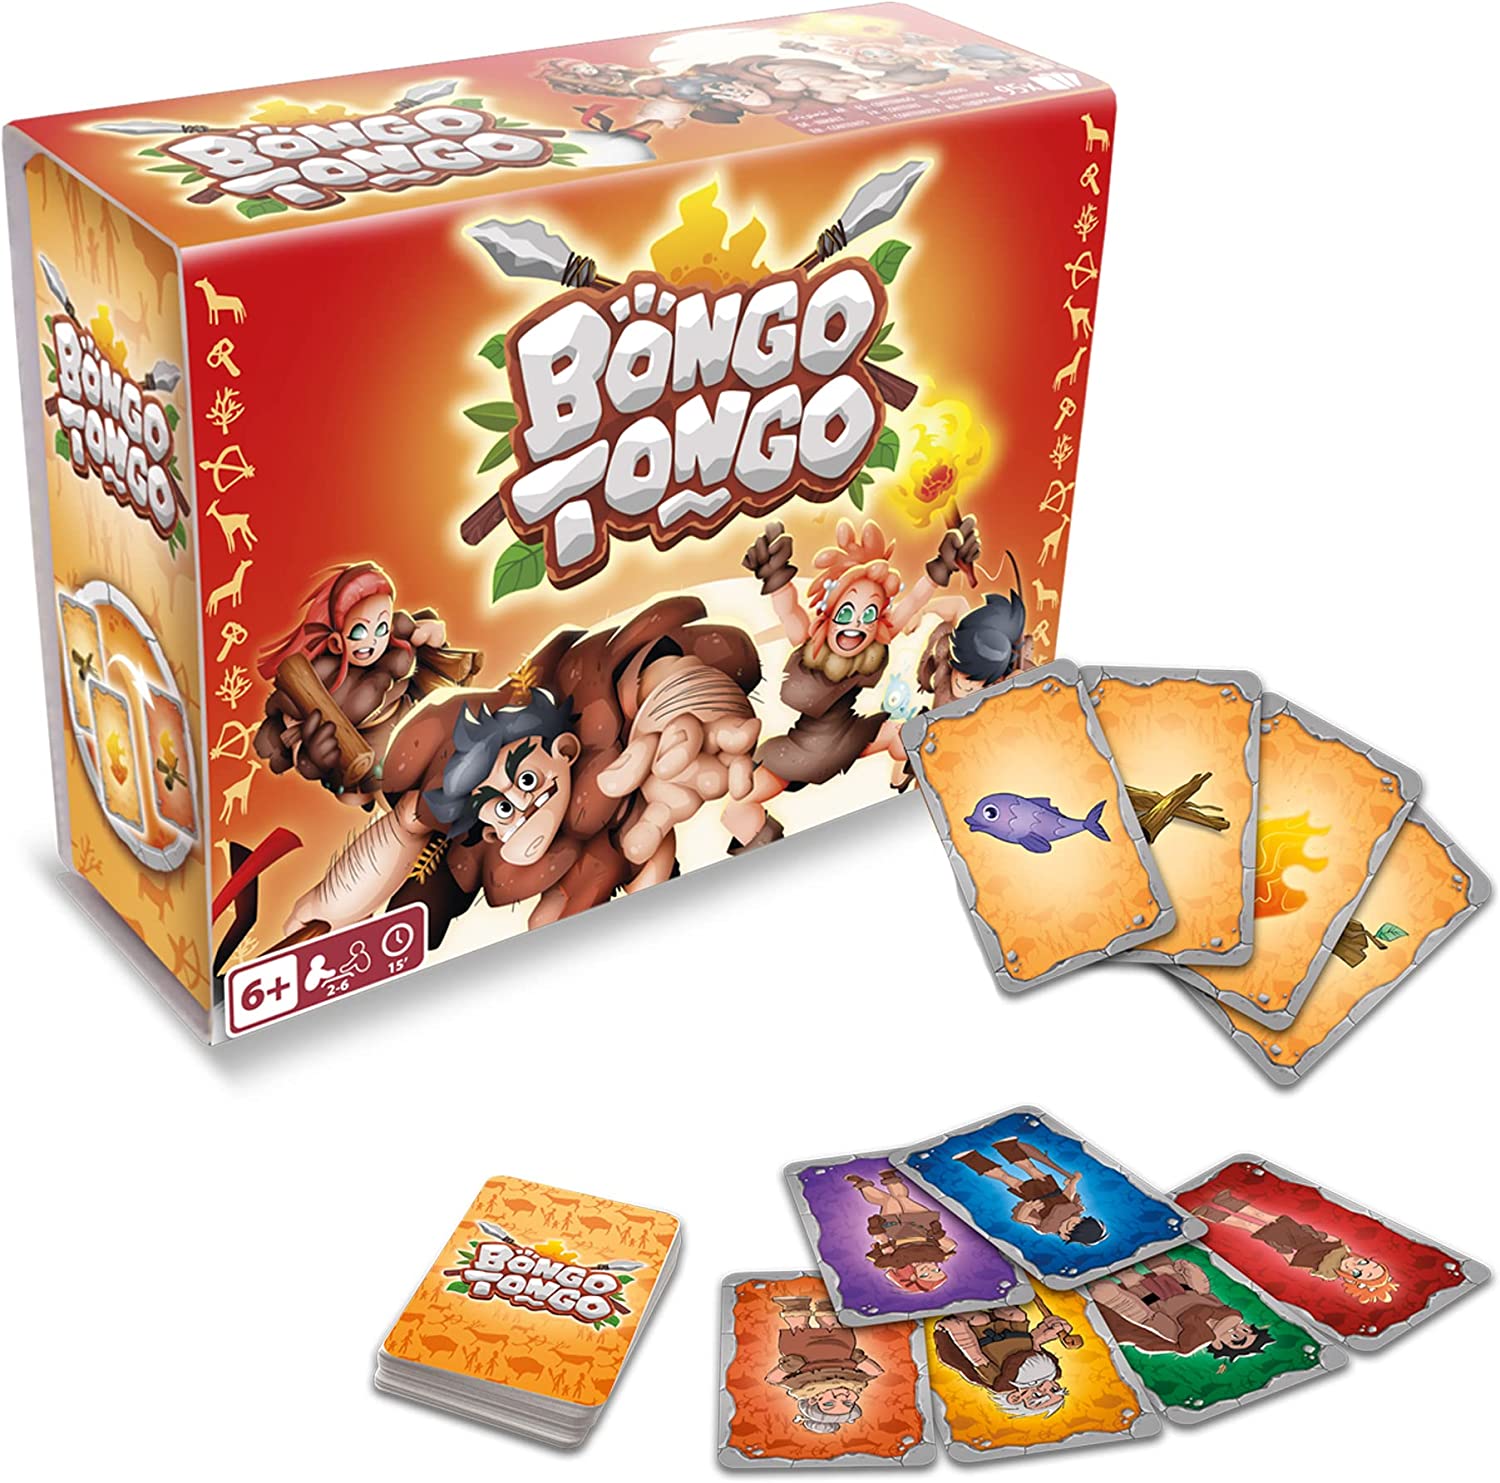 Ver categoría de bongo tongo